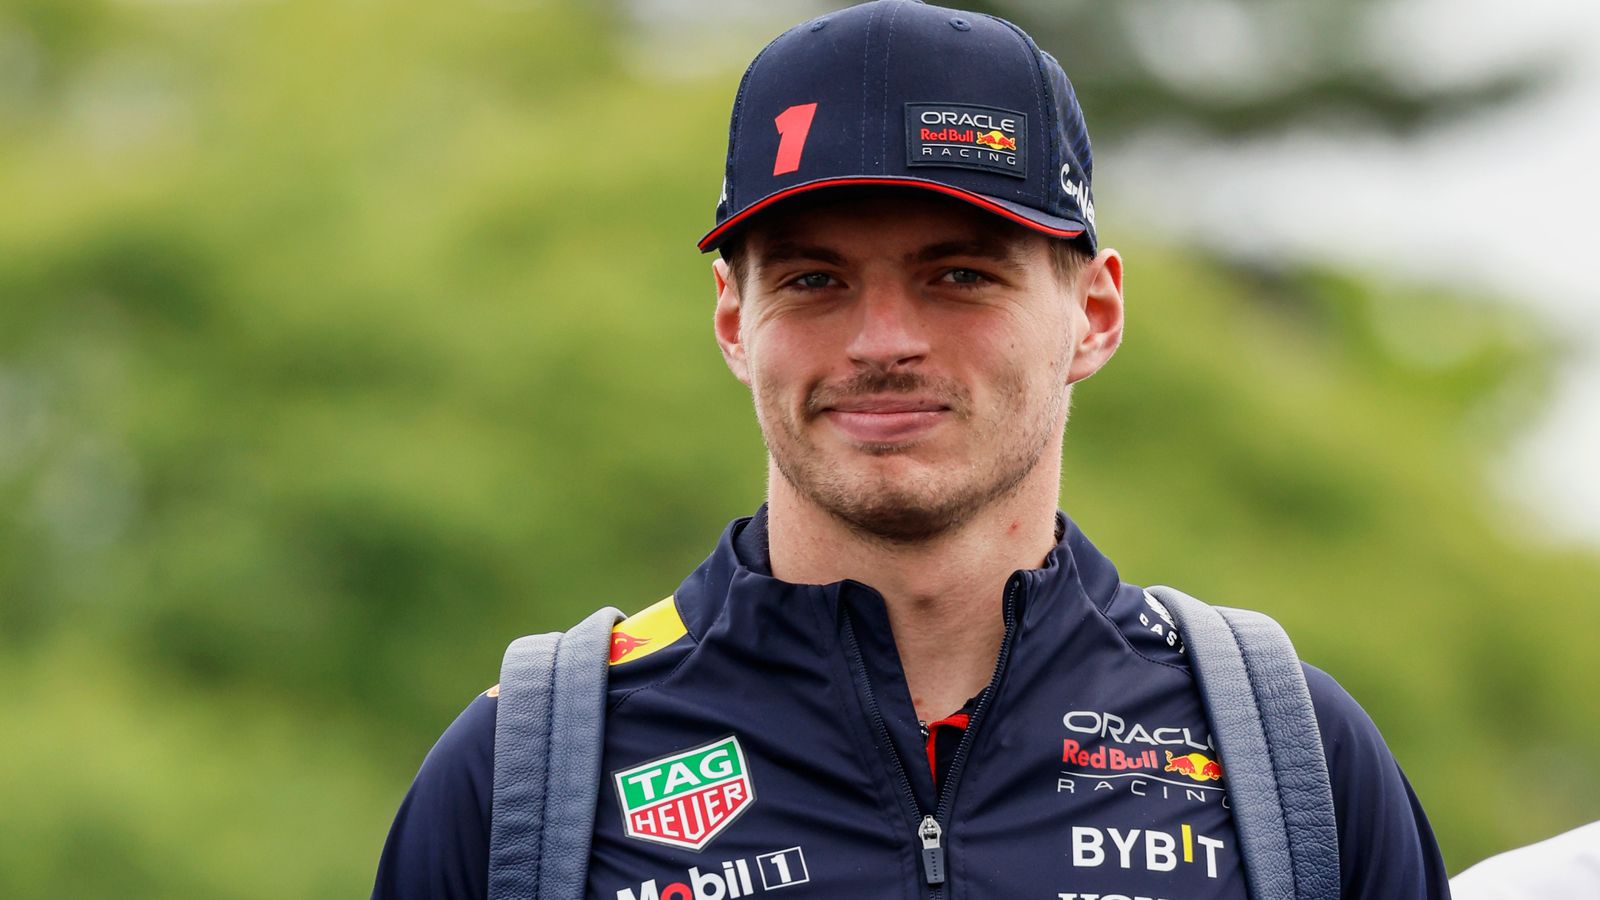 Canadian GP Max Verstappen anticipates 'surprises' in qualifying with